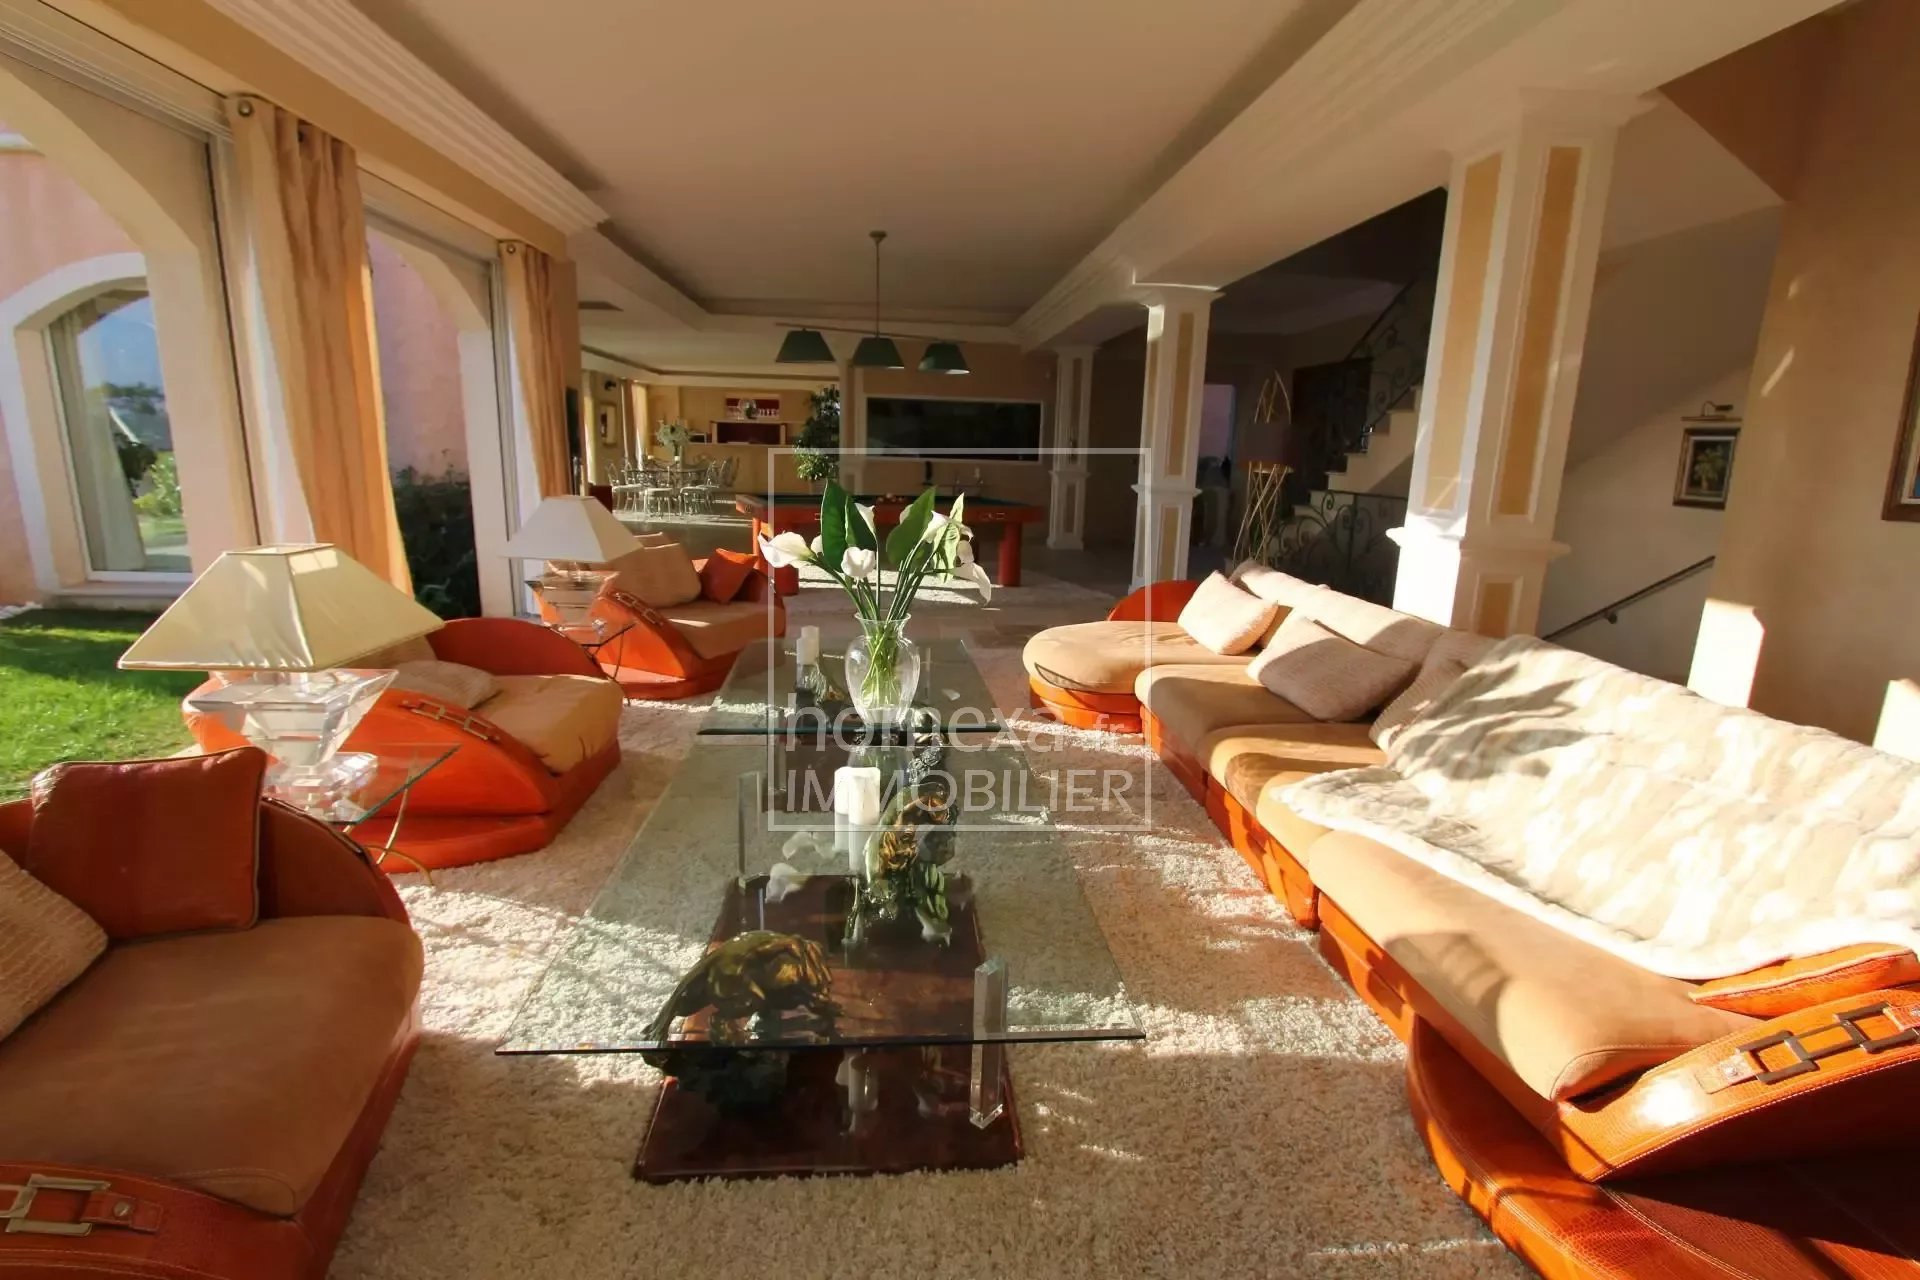 prestigious properties mougins : living room view